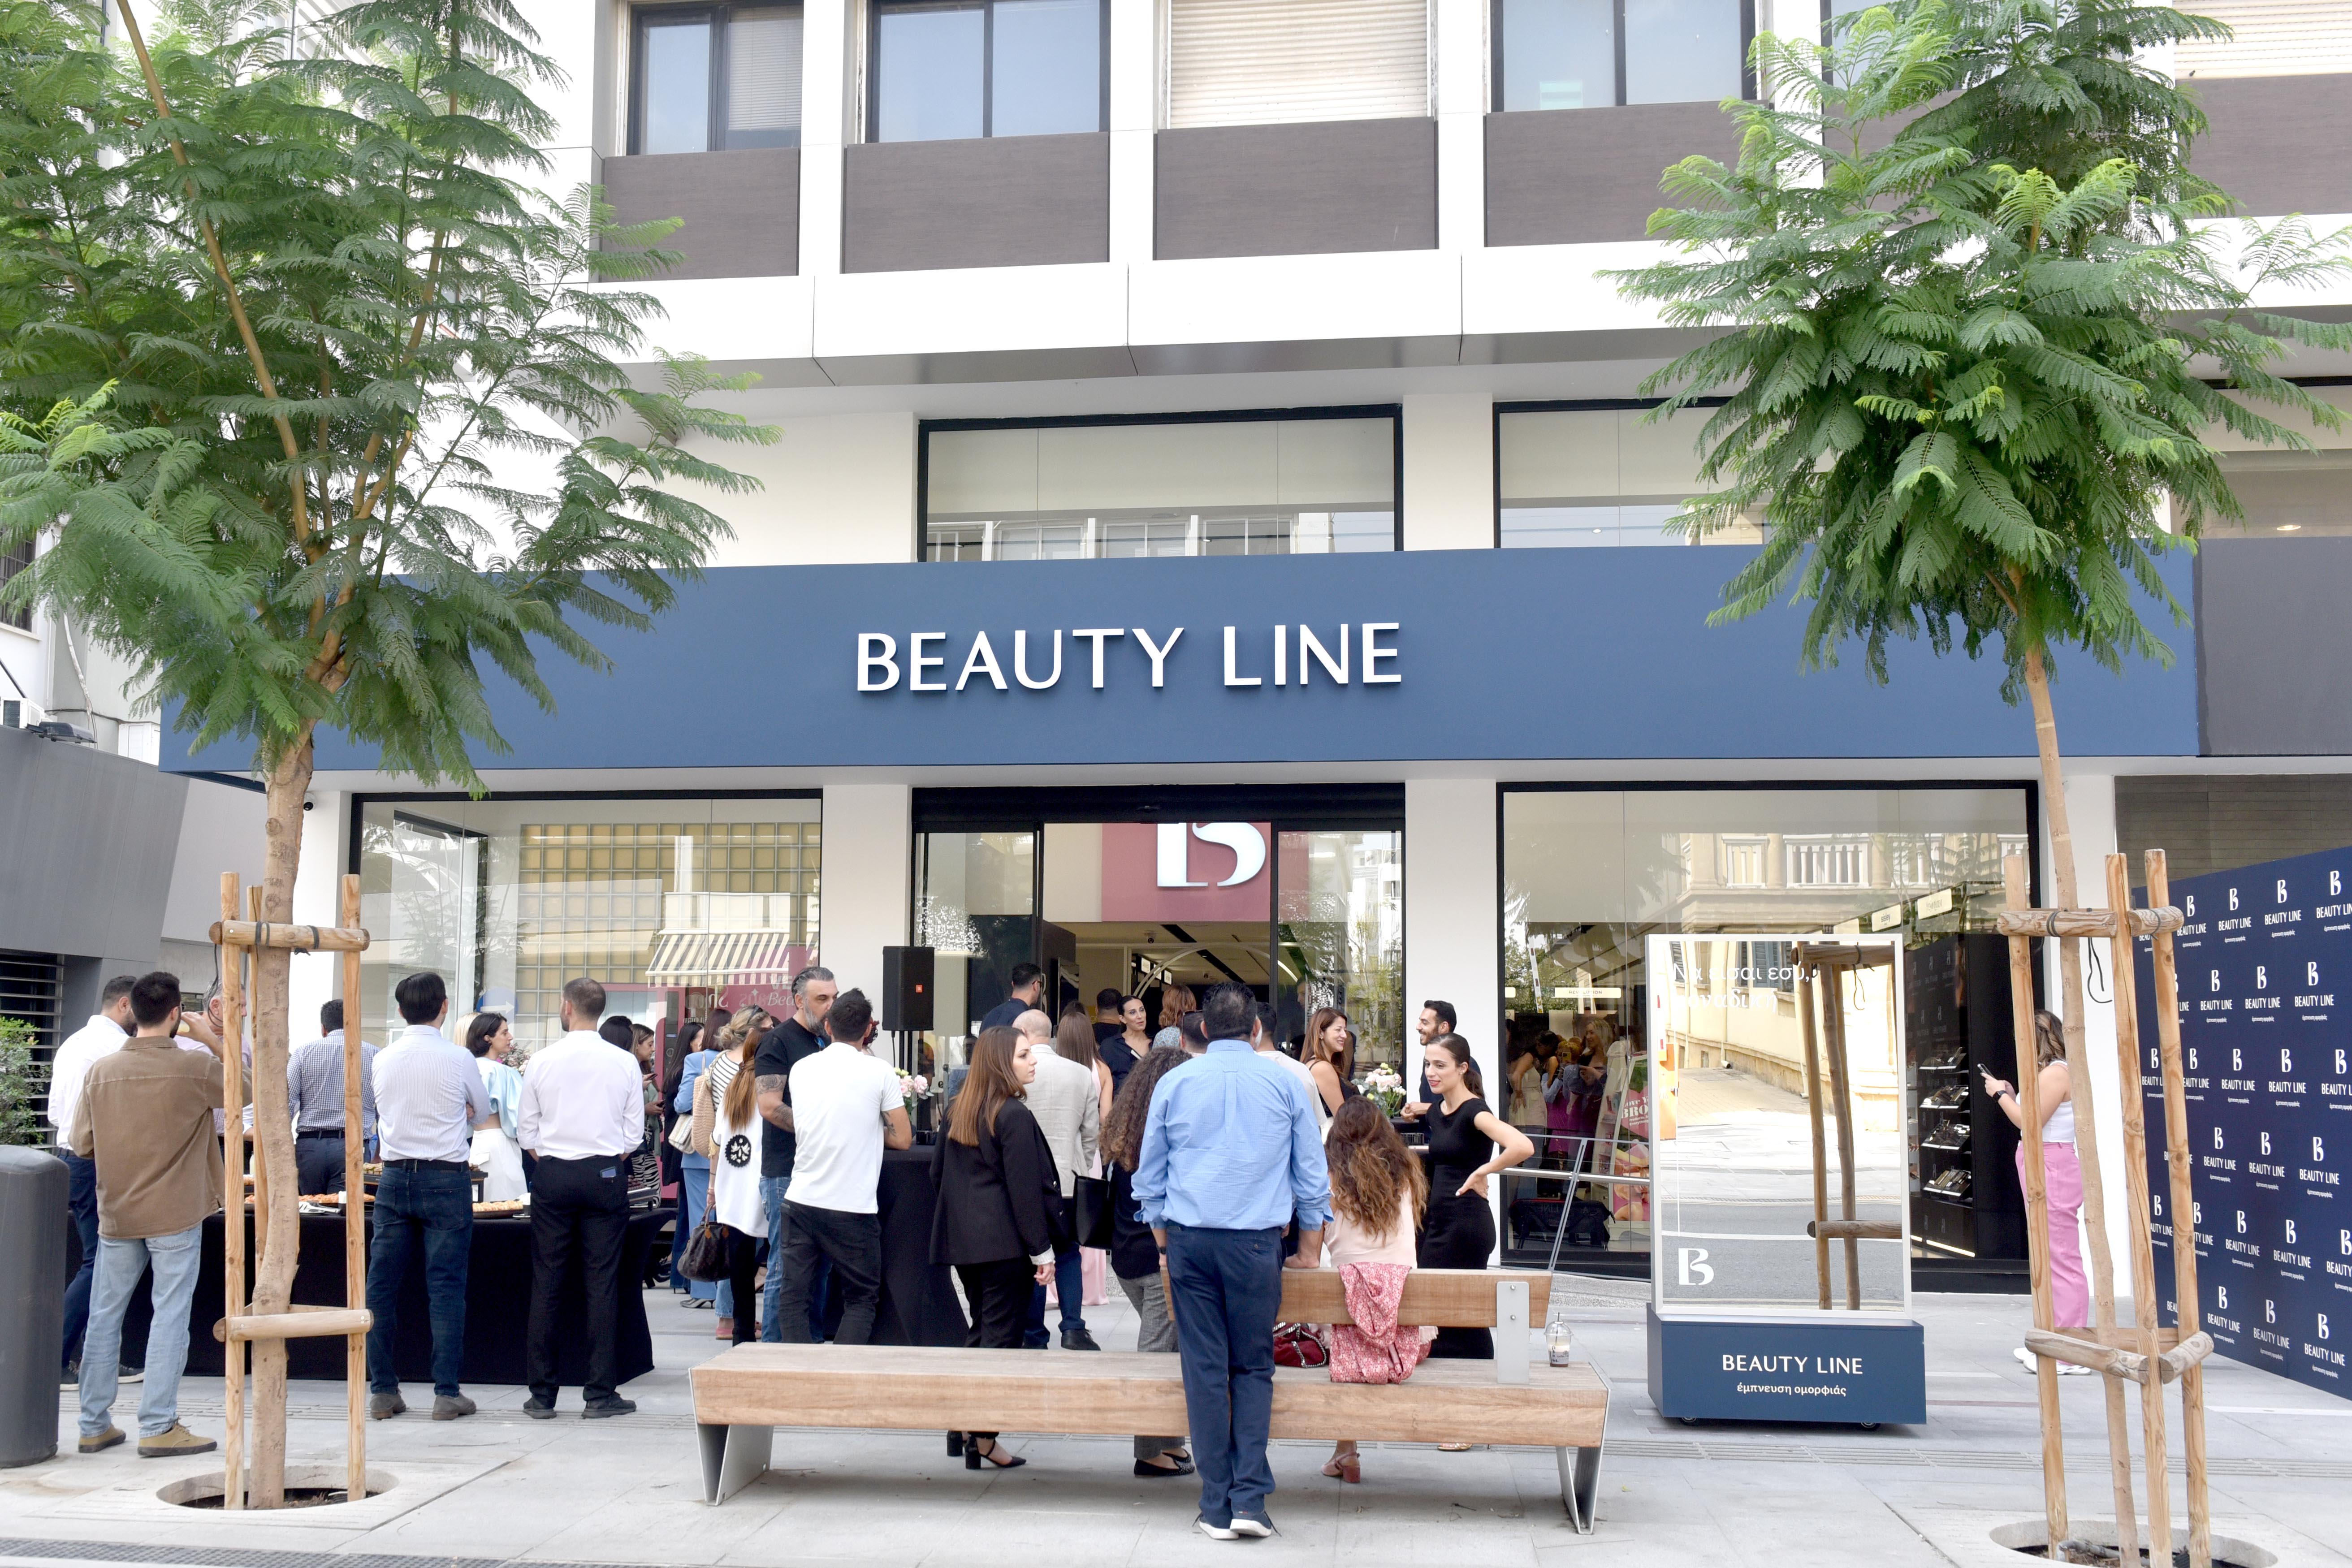 Beauty Line: Mε ανανεωμένη ταυτότητα και νέο κατάστημα στο κέντρο της Λευκωσίας, γίνεται ο απόλυτος προορισμός ομορφιάς